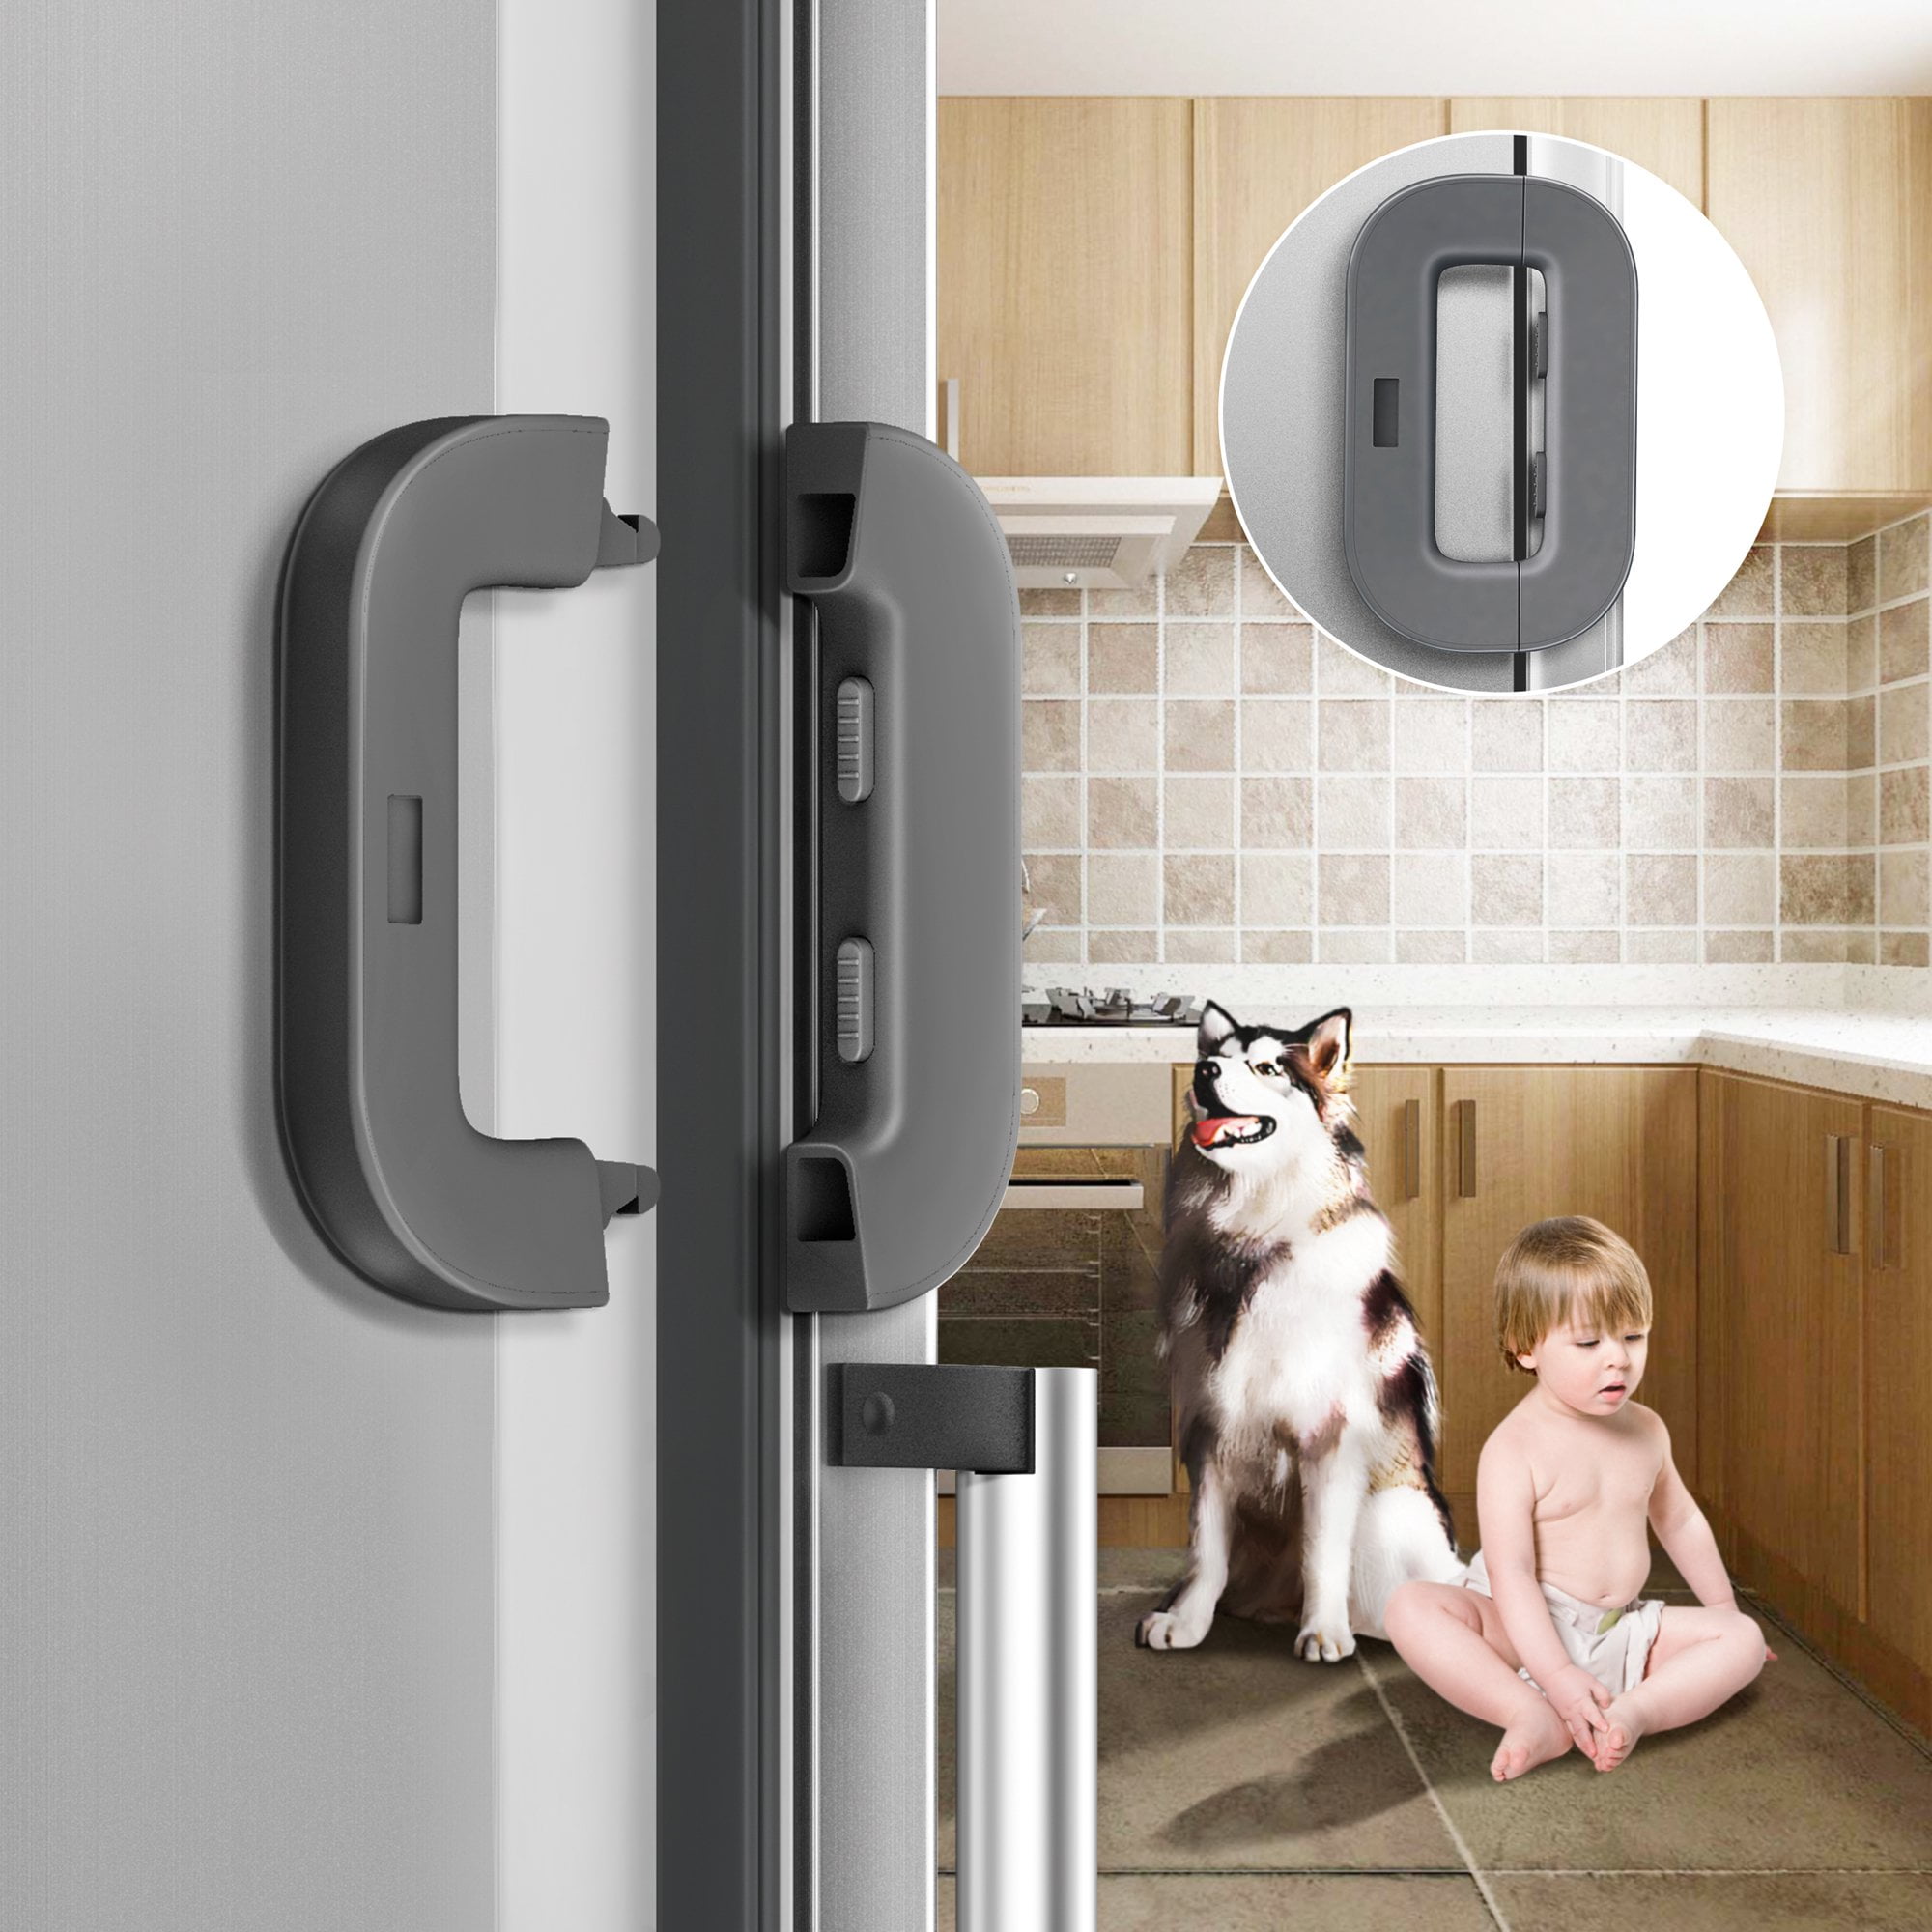 4 PACK Child Proof Fridge Lock, WeGuard Child Safety Locks for Refrigerator  Fridge Freezer Door, Baby Proofing Cabinet Lock Latches for Toddler Kids